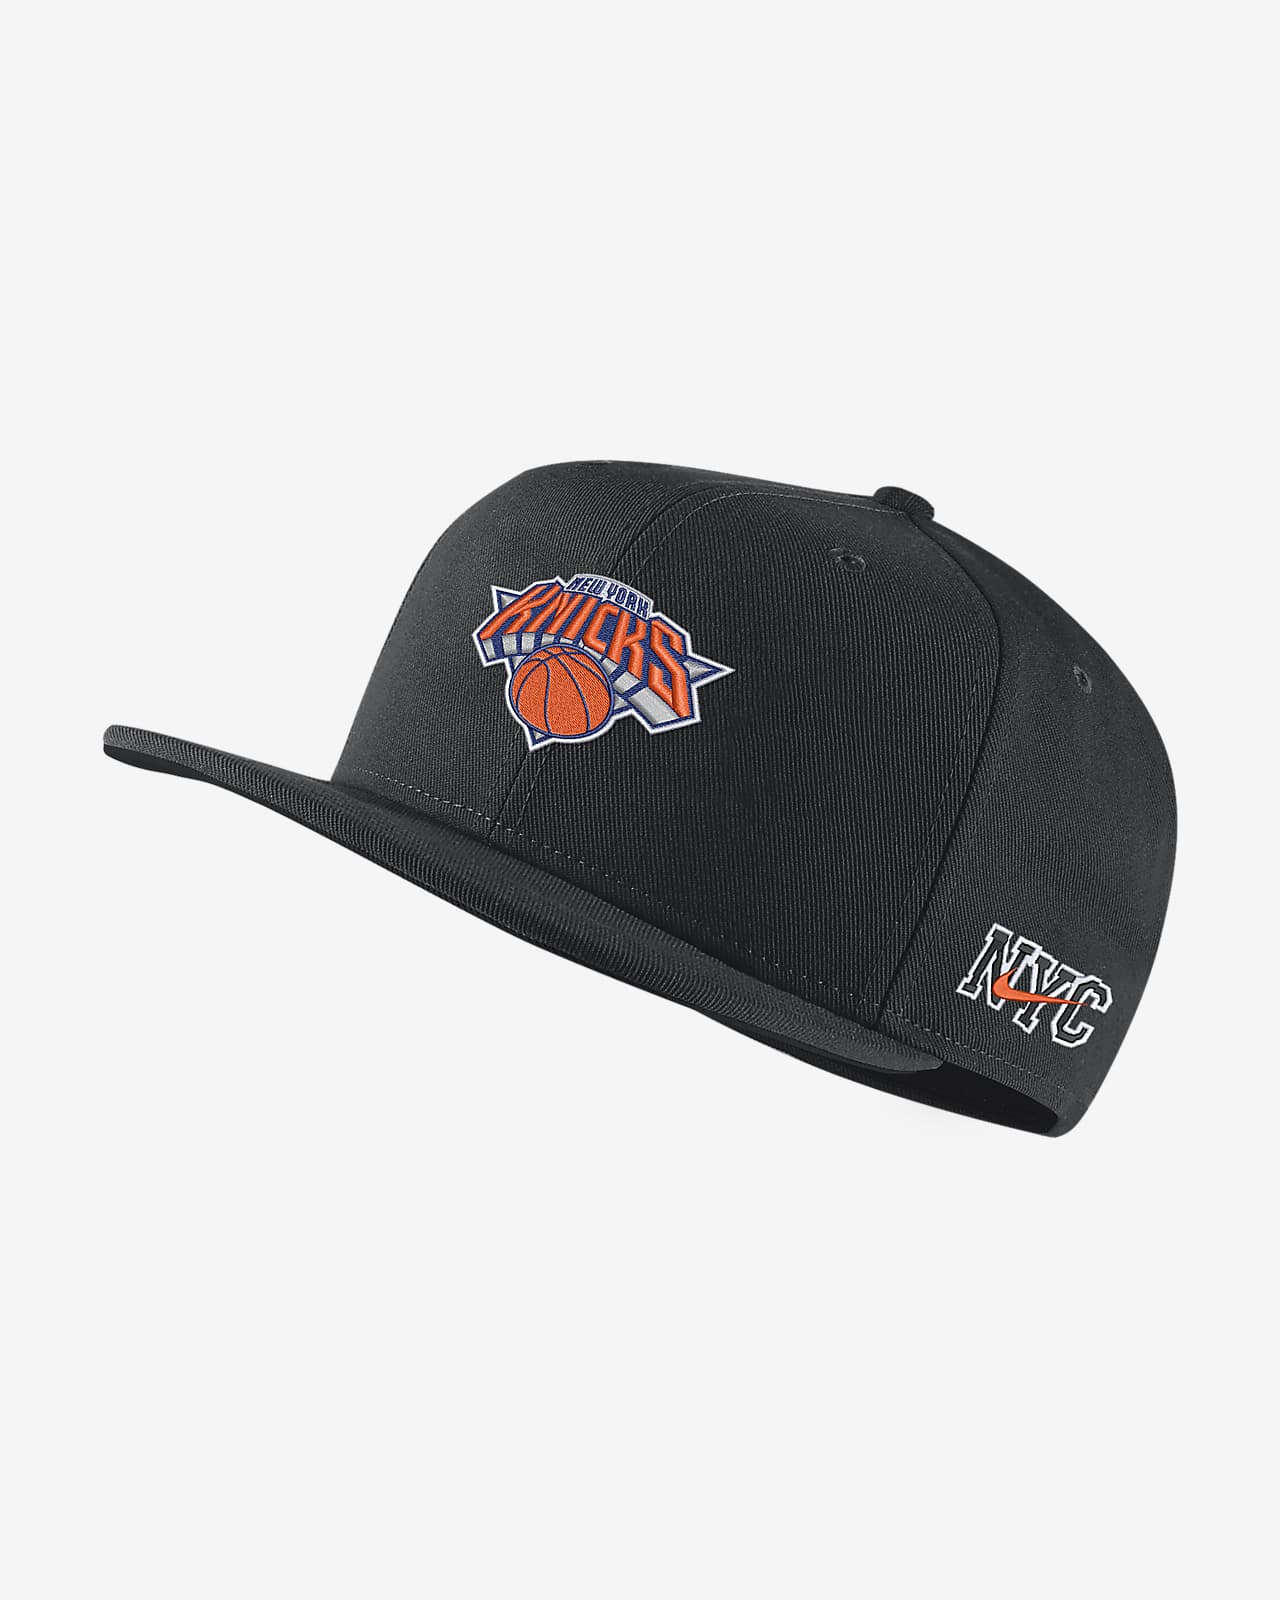 knicks city edition hat